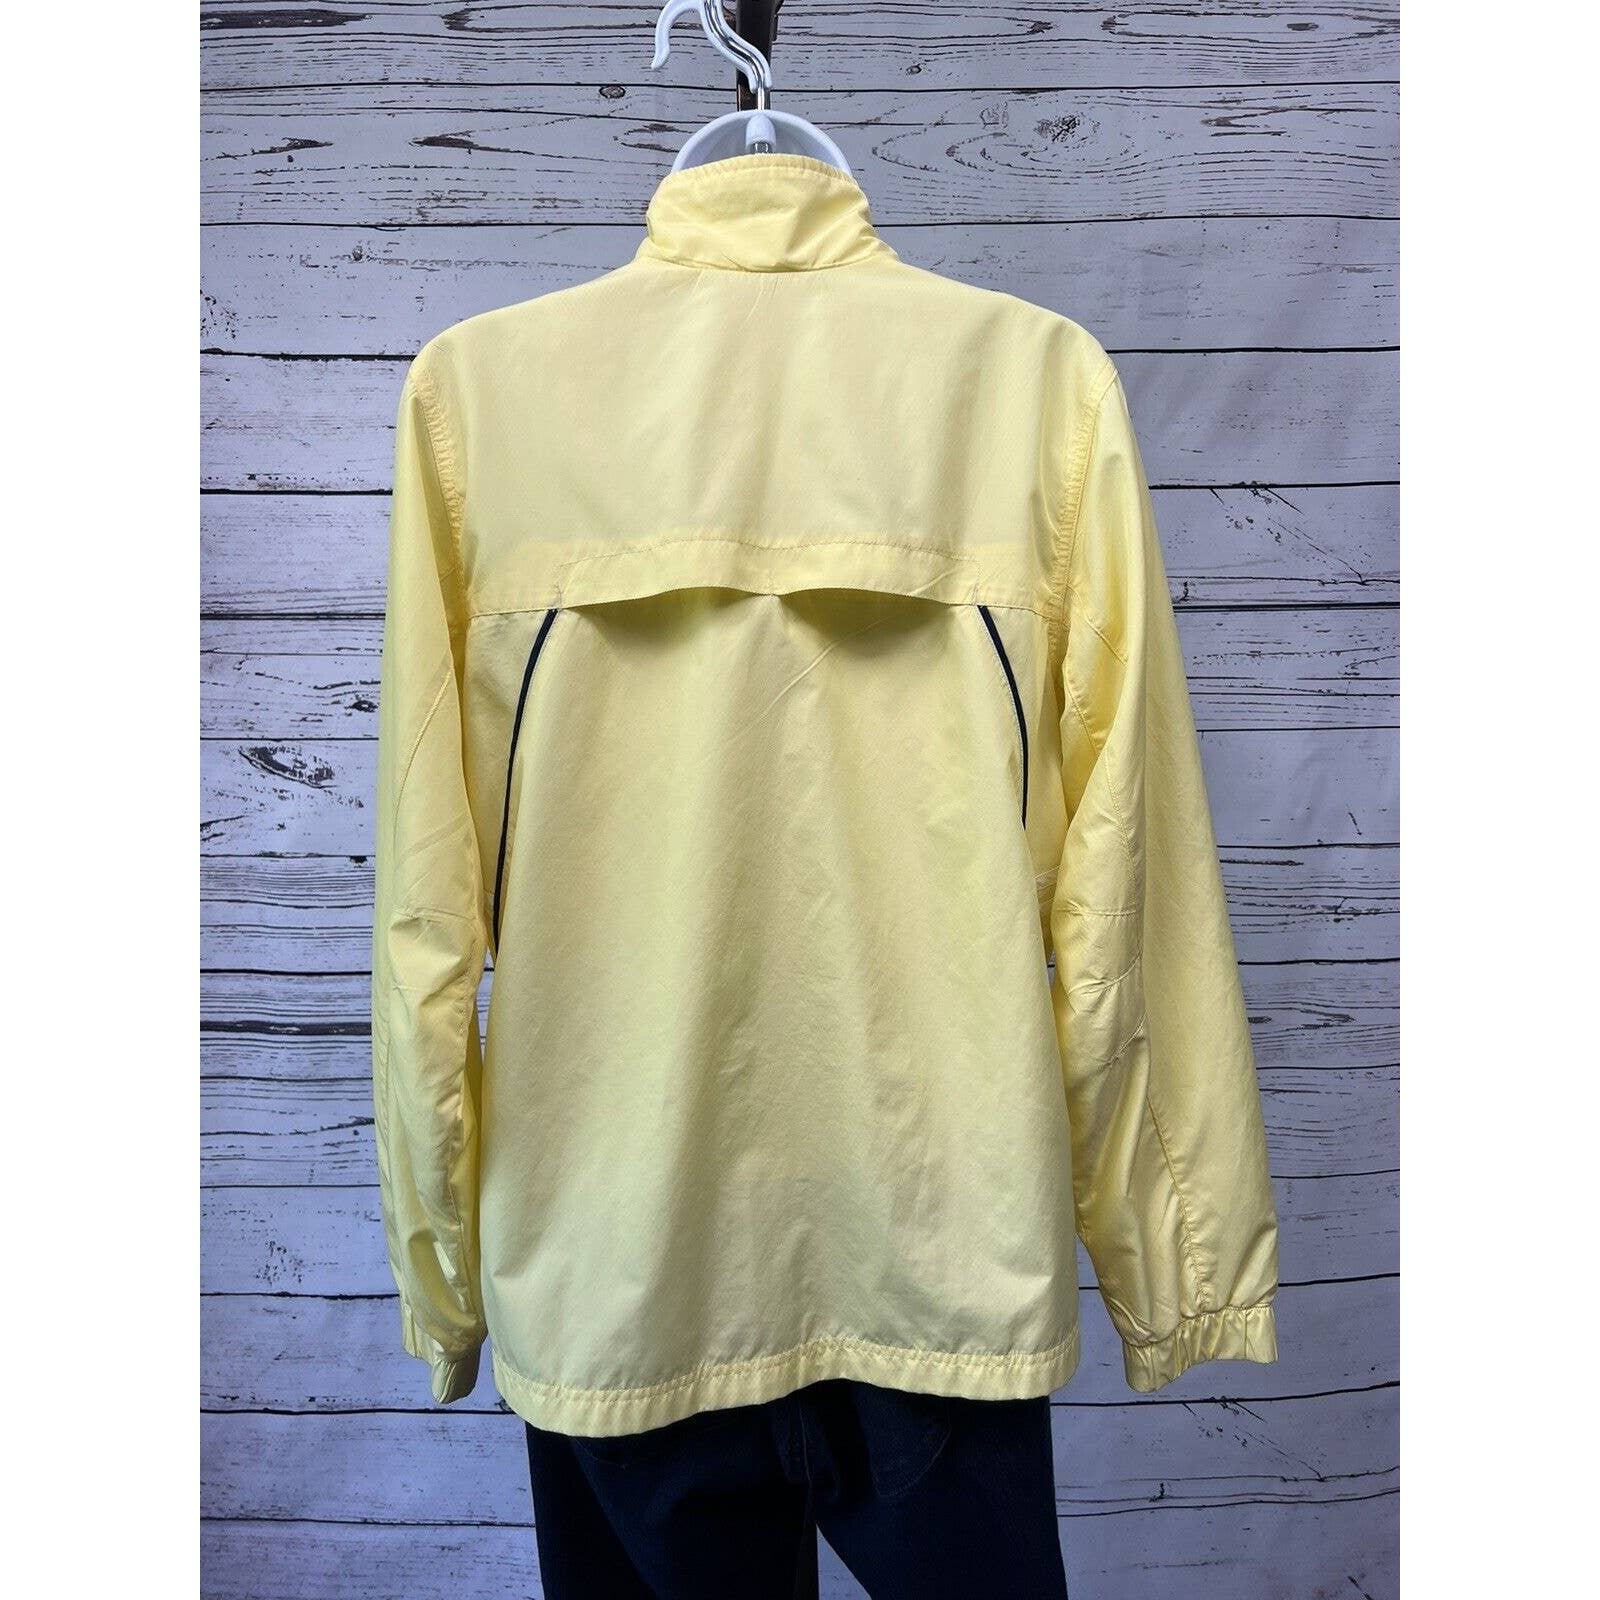 Adidas Windbreaker Jacket Womens Medium Yellow Nylon Vintage Lightweight Vented